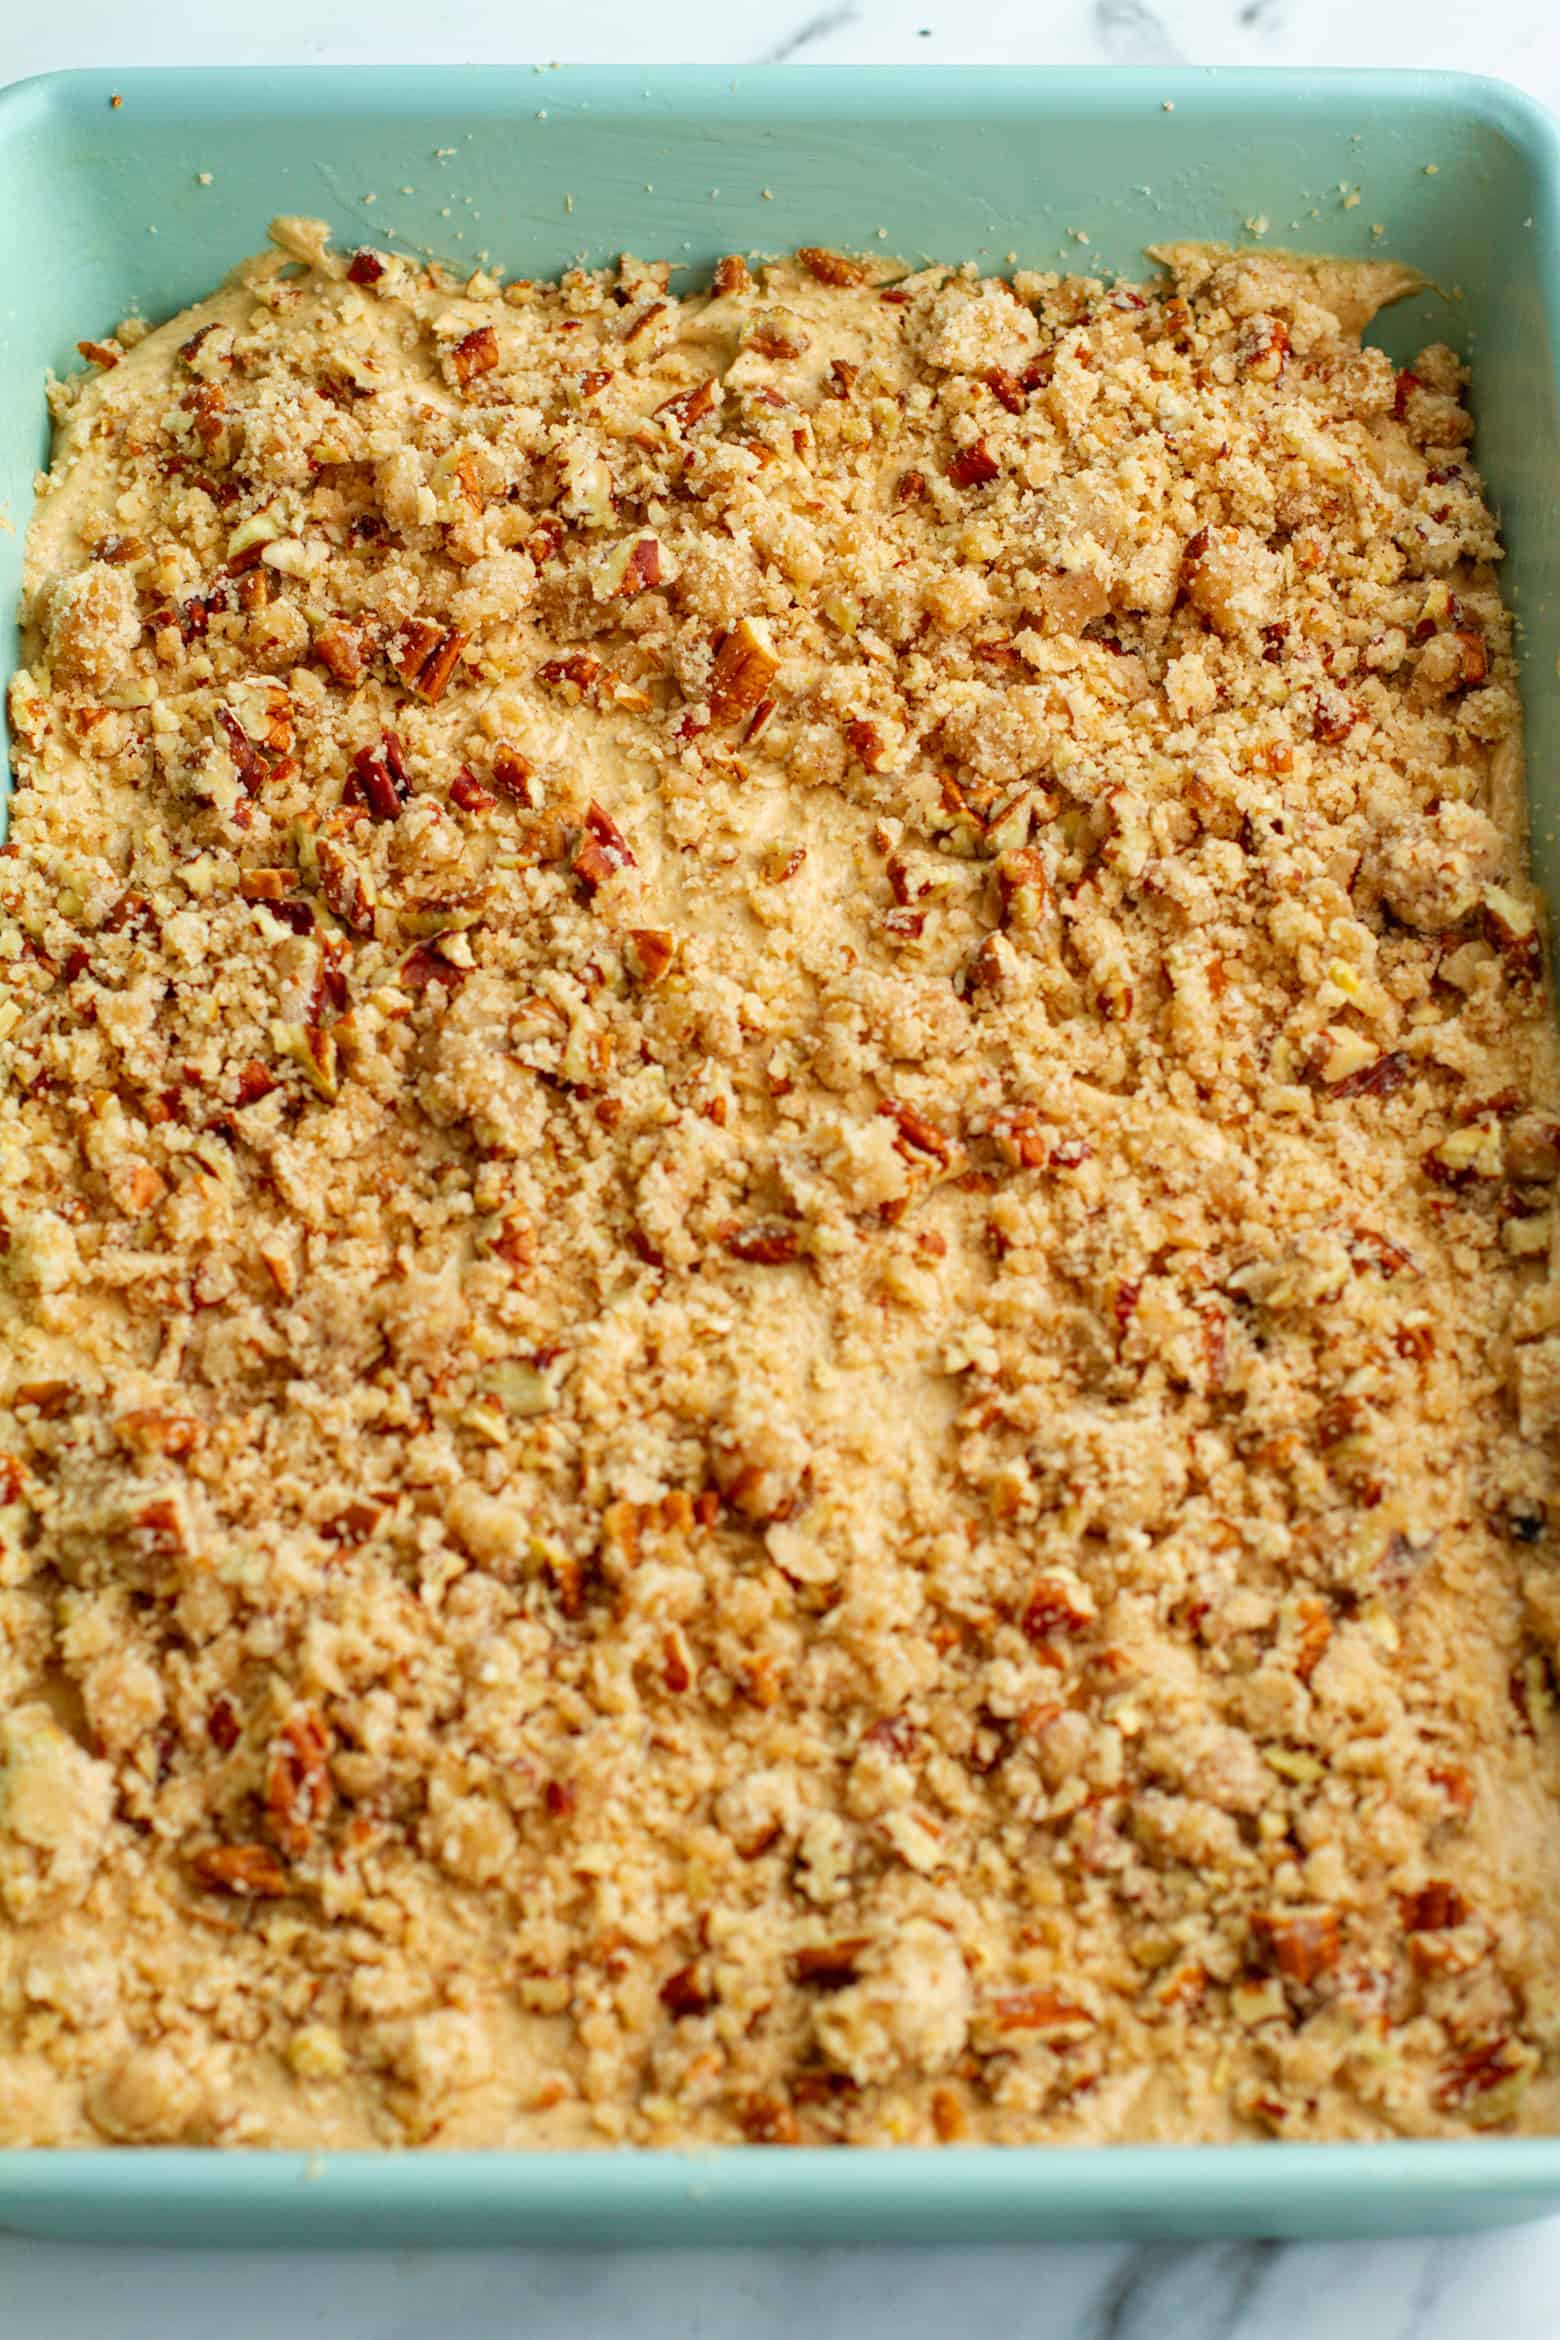 Cinnamon Coffee Cake final layer of pecan streusel before baking.